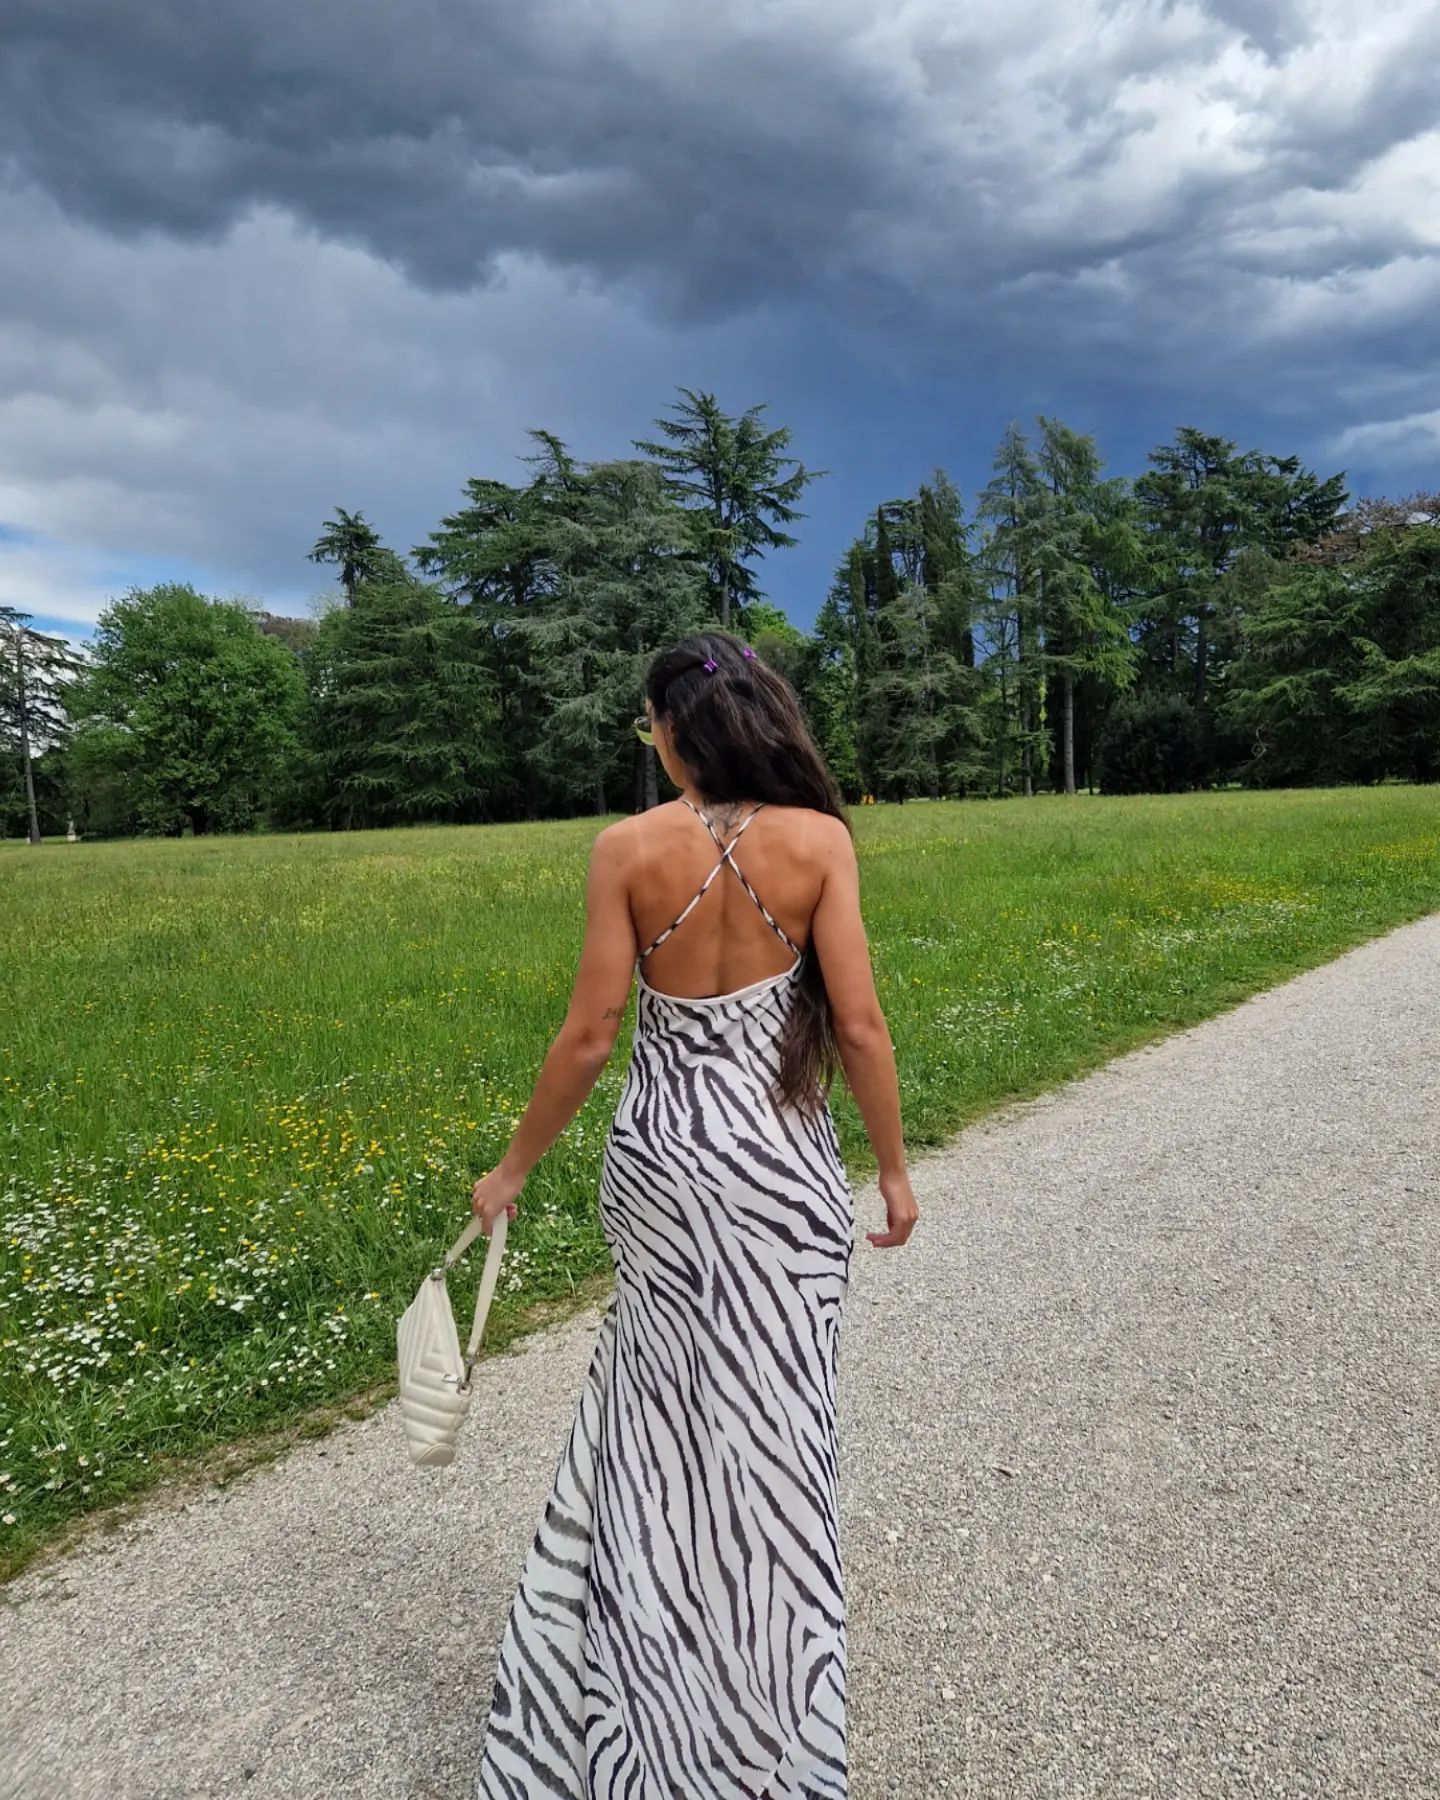 🦓

#outfit #outfitpost #outfitoftheday #italy #Italia #girl #girls #girly #model #fvg #natura #nature #brunette #zebra #postoftheday #blackandwhite #bw